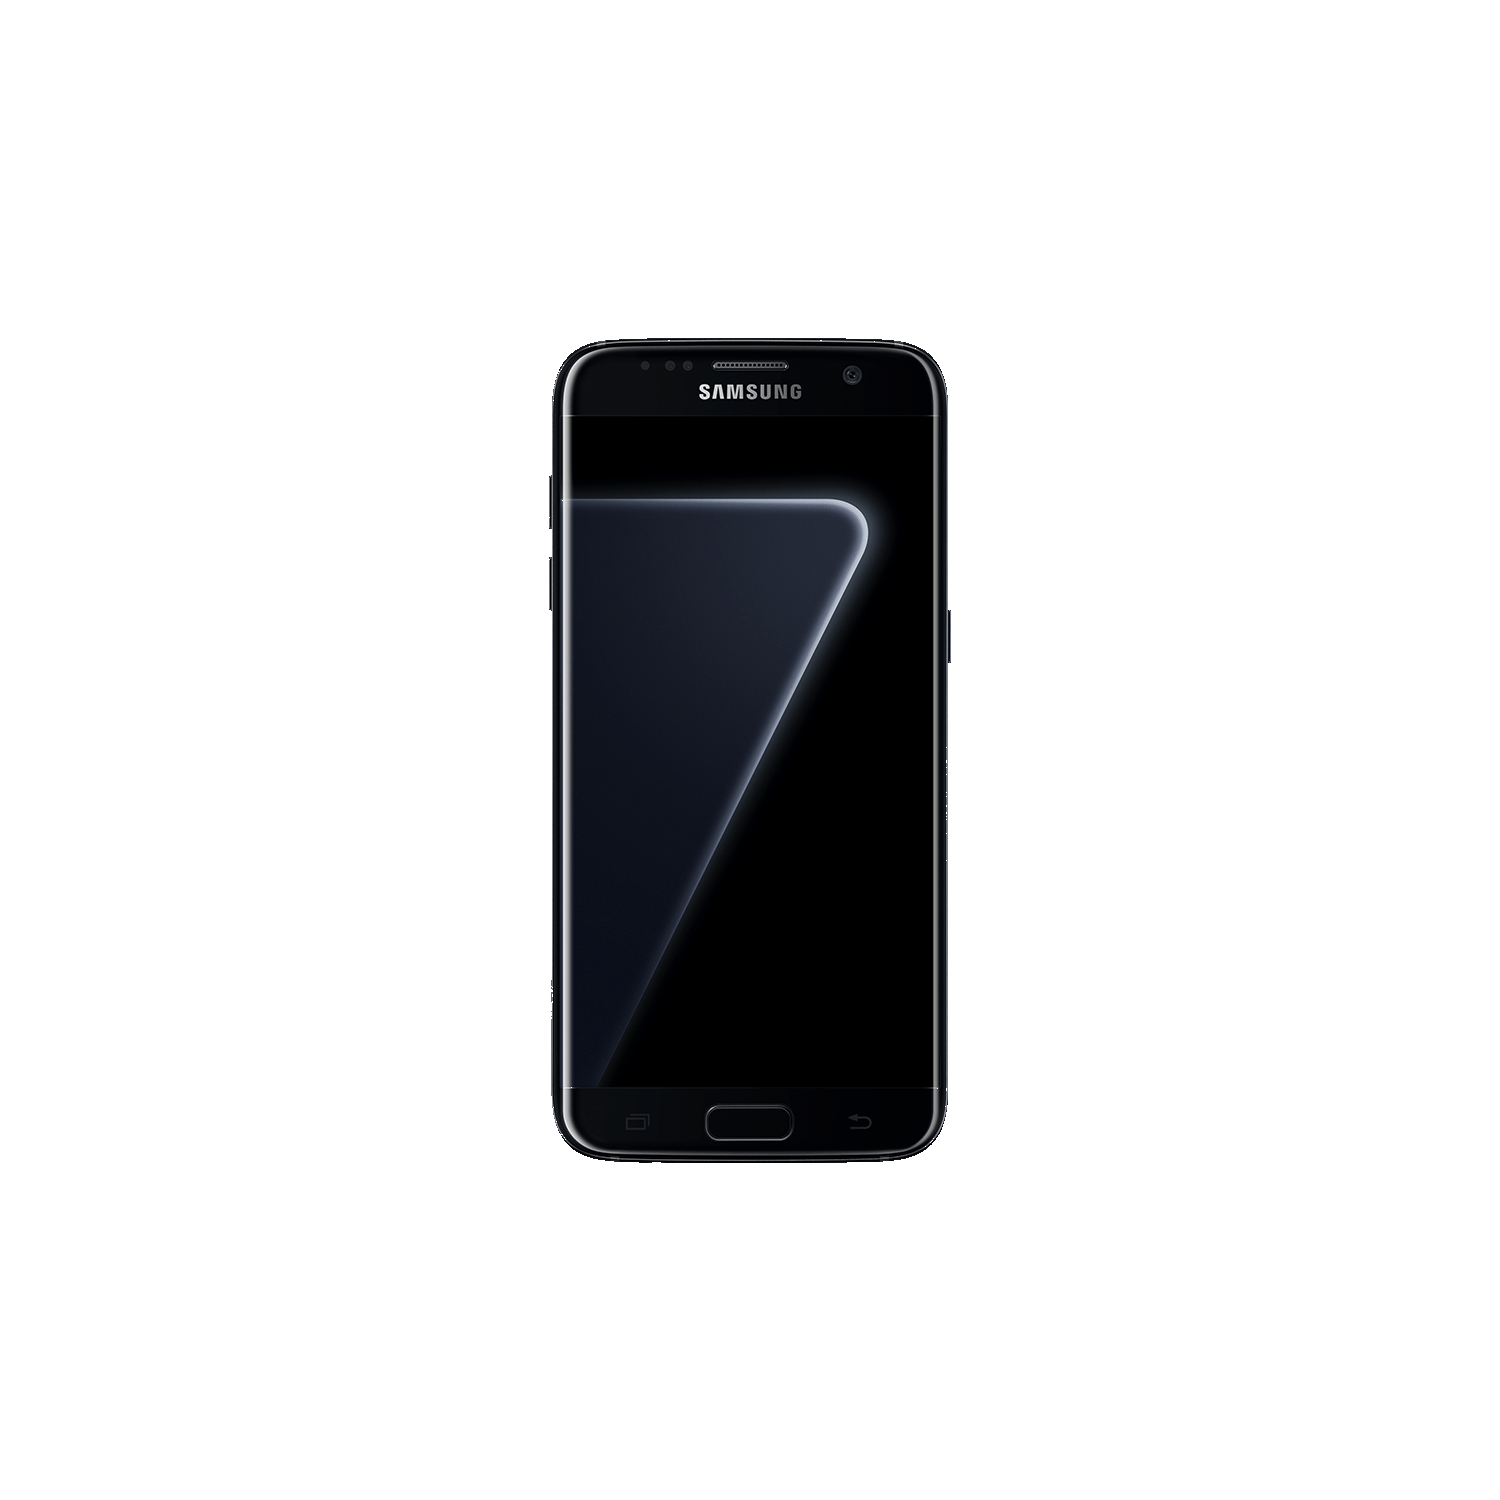 Refurbished (Good) - Samsung Galaxy S7 edge 32GB Smartphone - Black Pearl - Unlocked